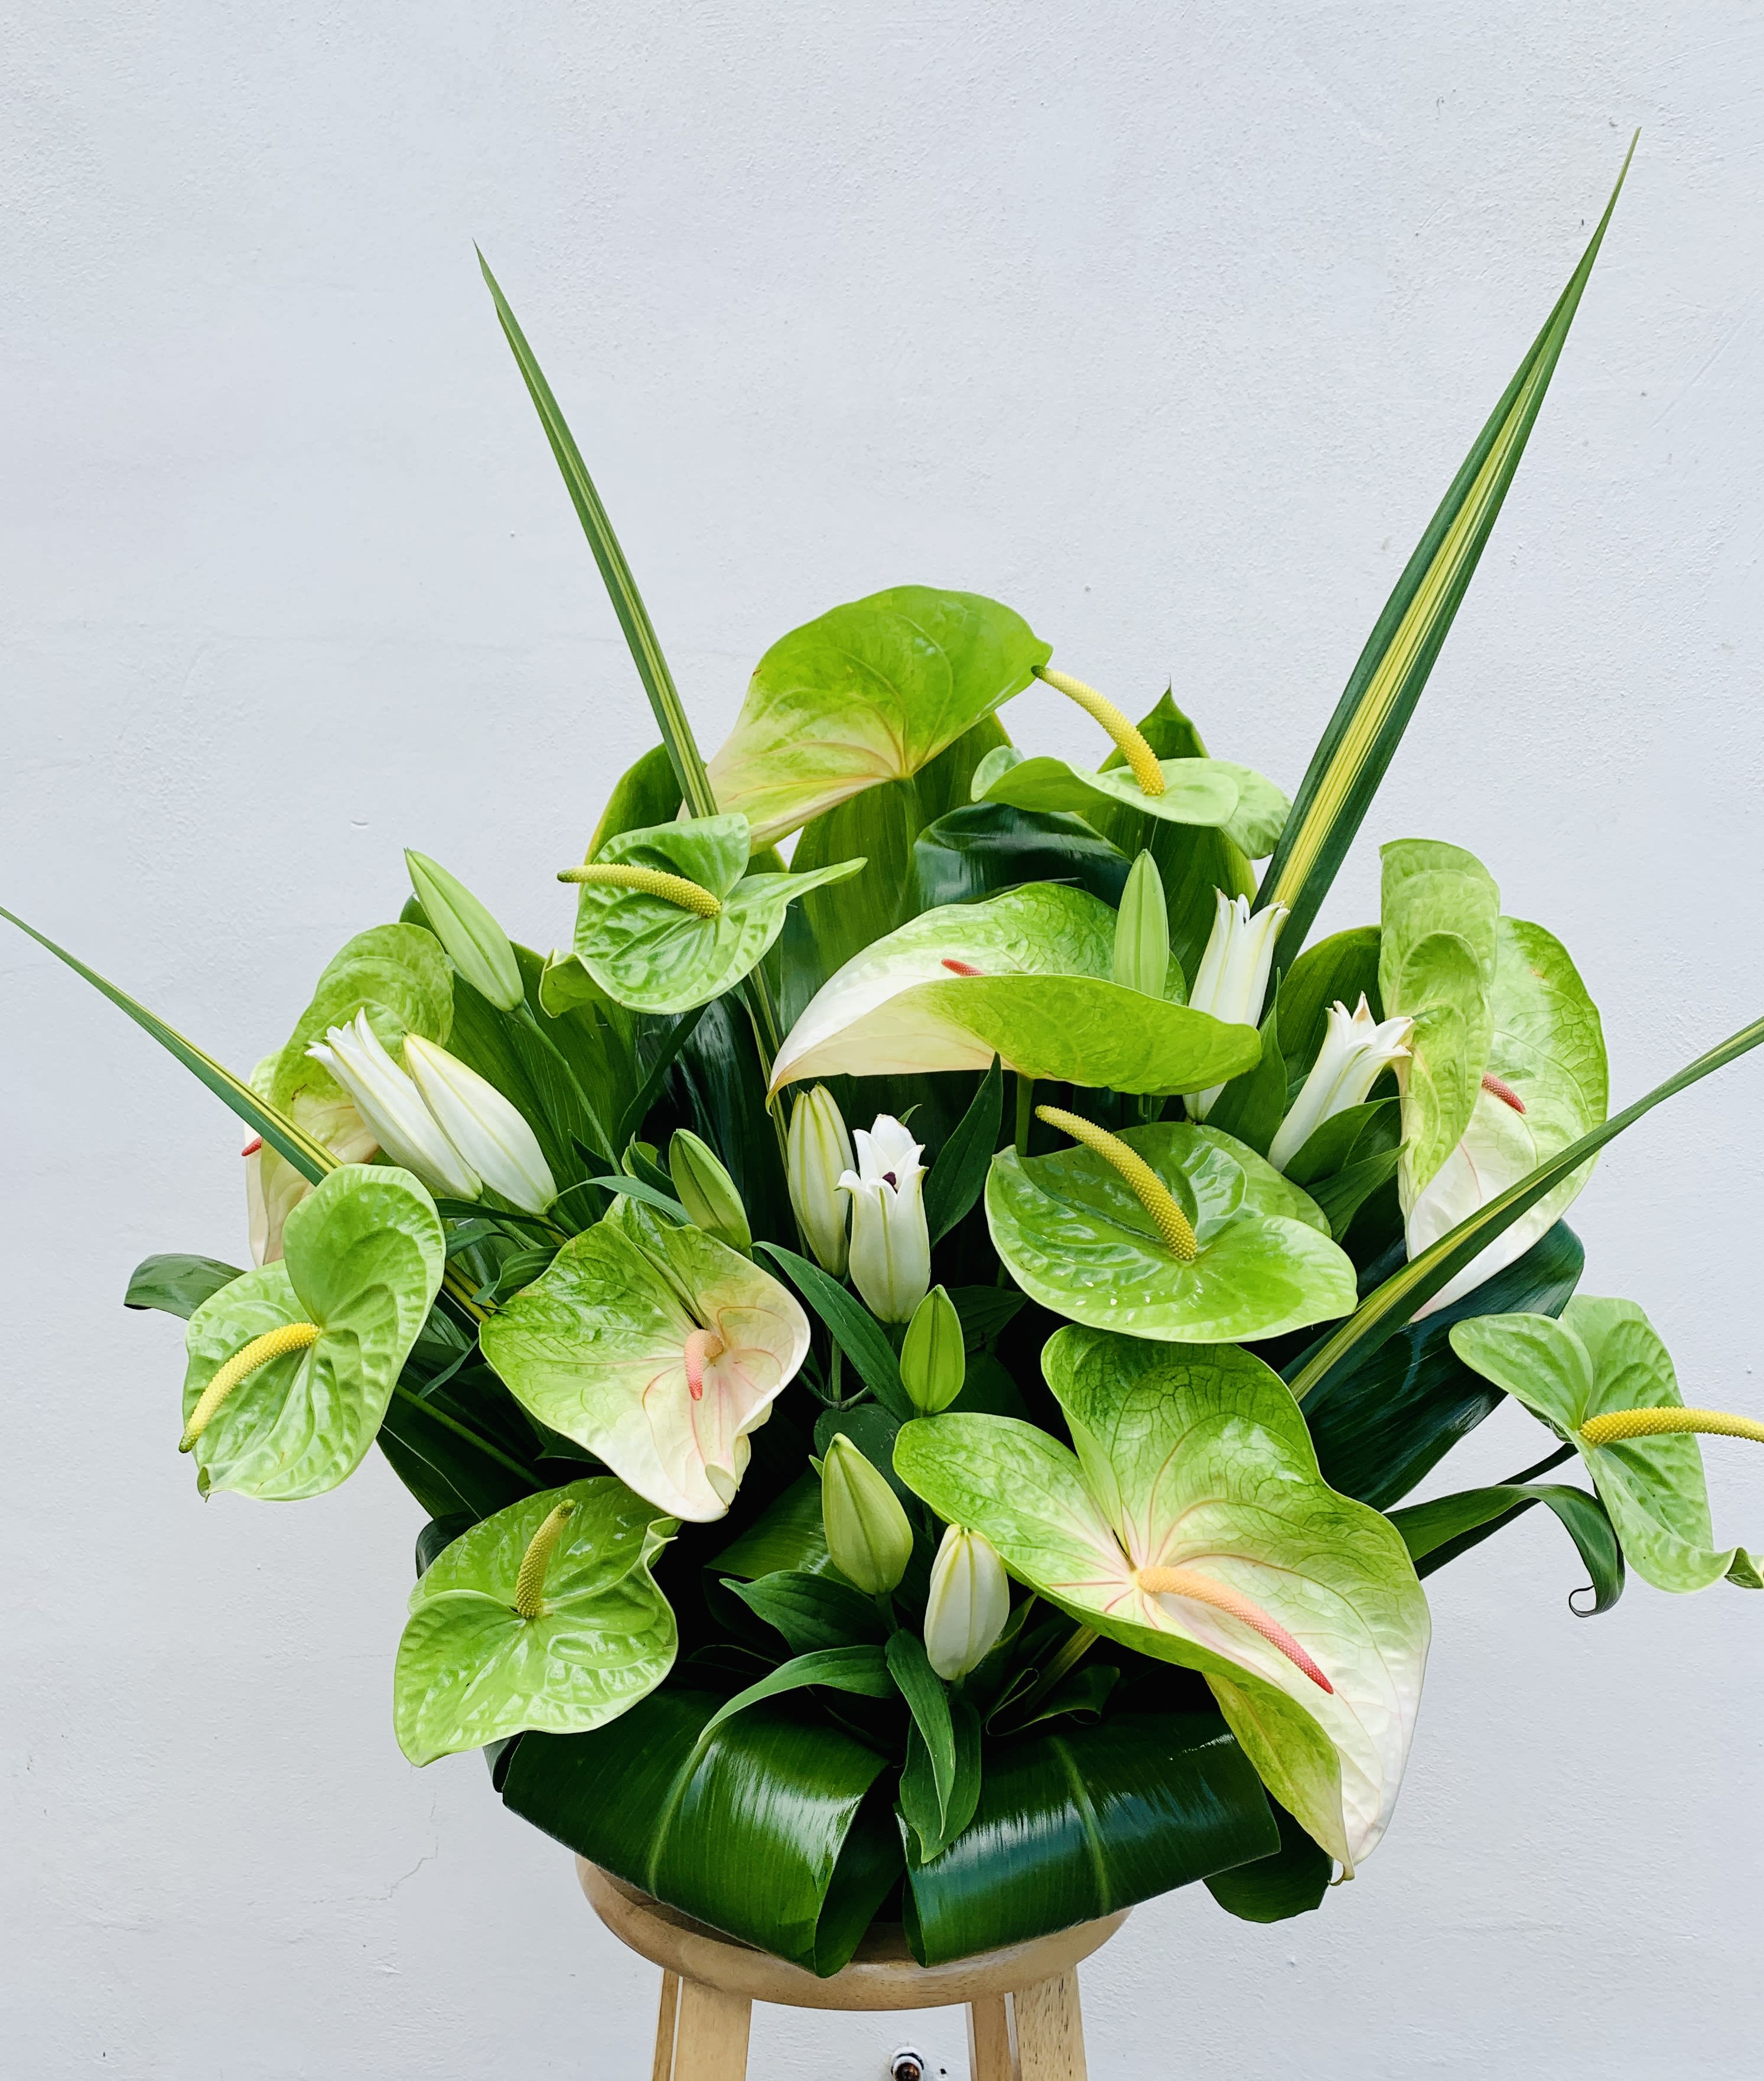 #158 Green Anthurium Mix Arrangement with stargazer lilies - Large Midori or Rainbow Anthuriums with stargazer lilies. standard as shown